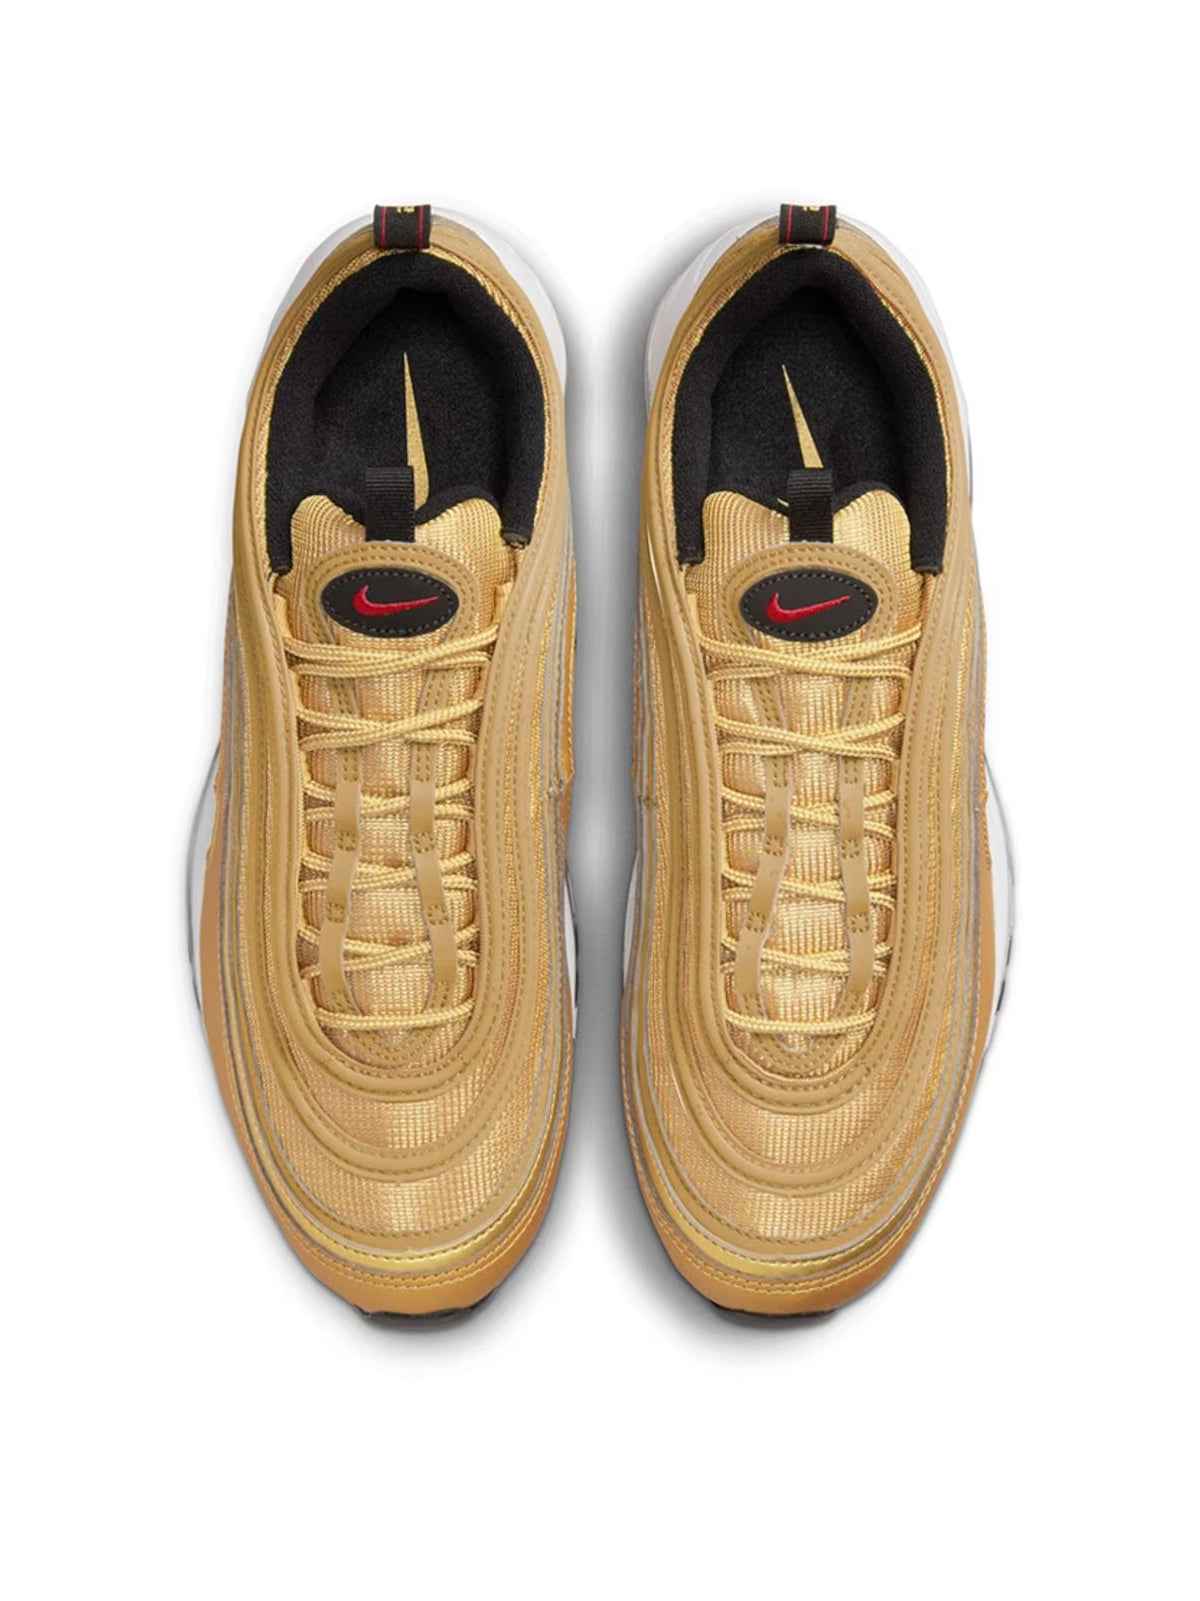 Air Max 97 OG "Golden Bullet" Sneakers